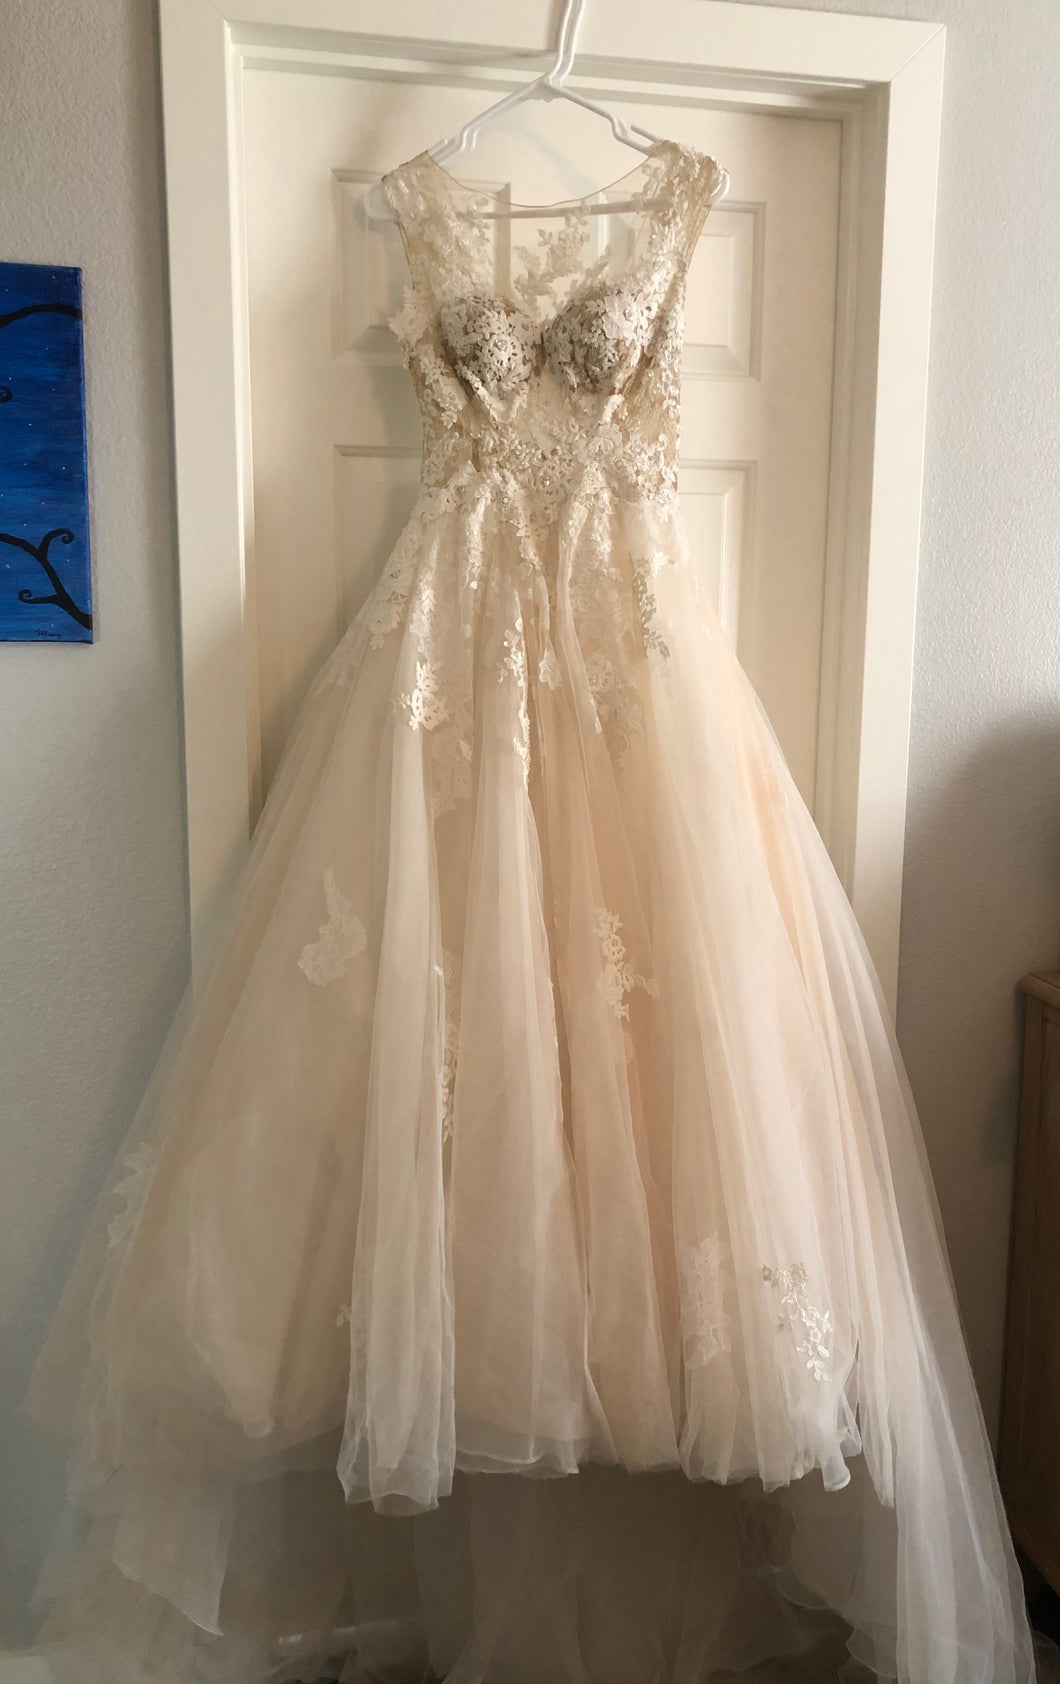 Pronovias 'Ofelia' size 6 used wedding dress front view on hanger